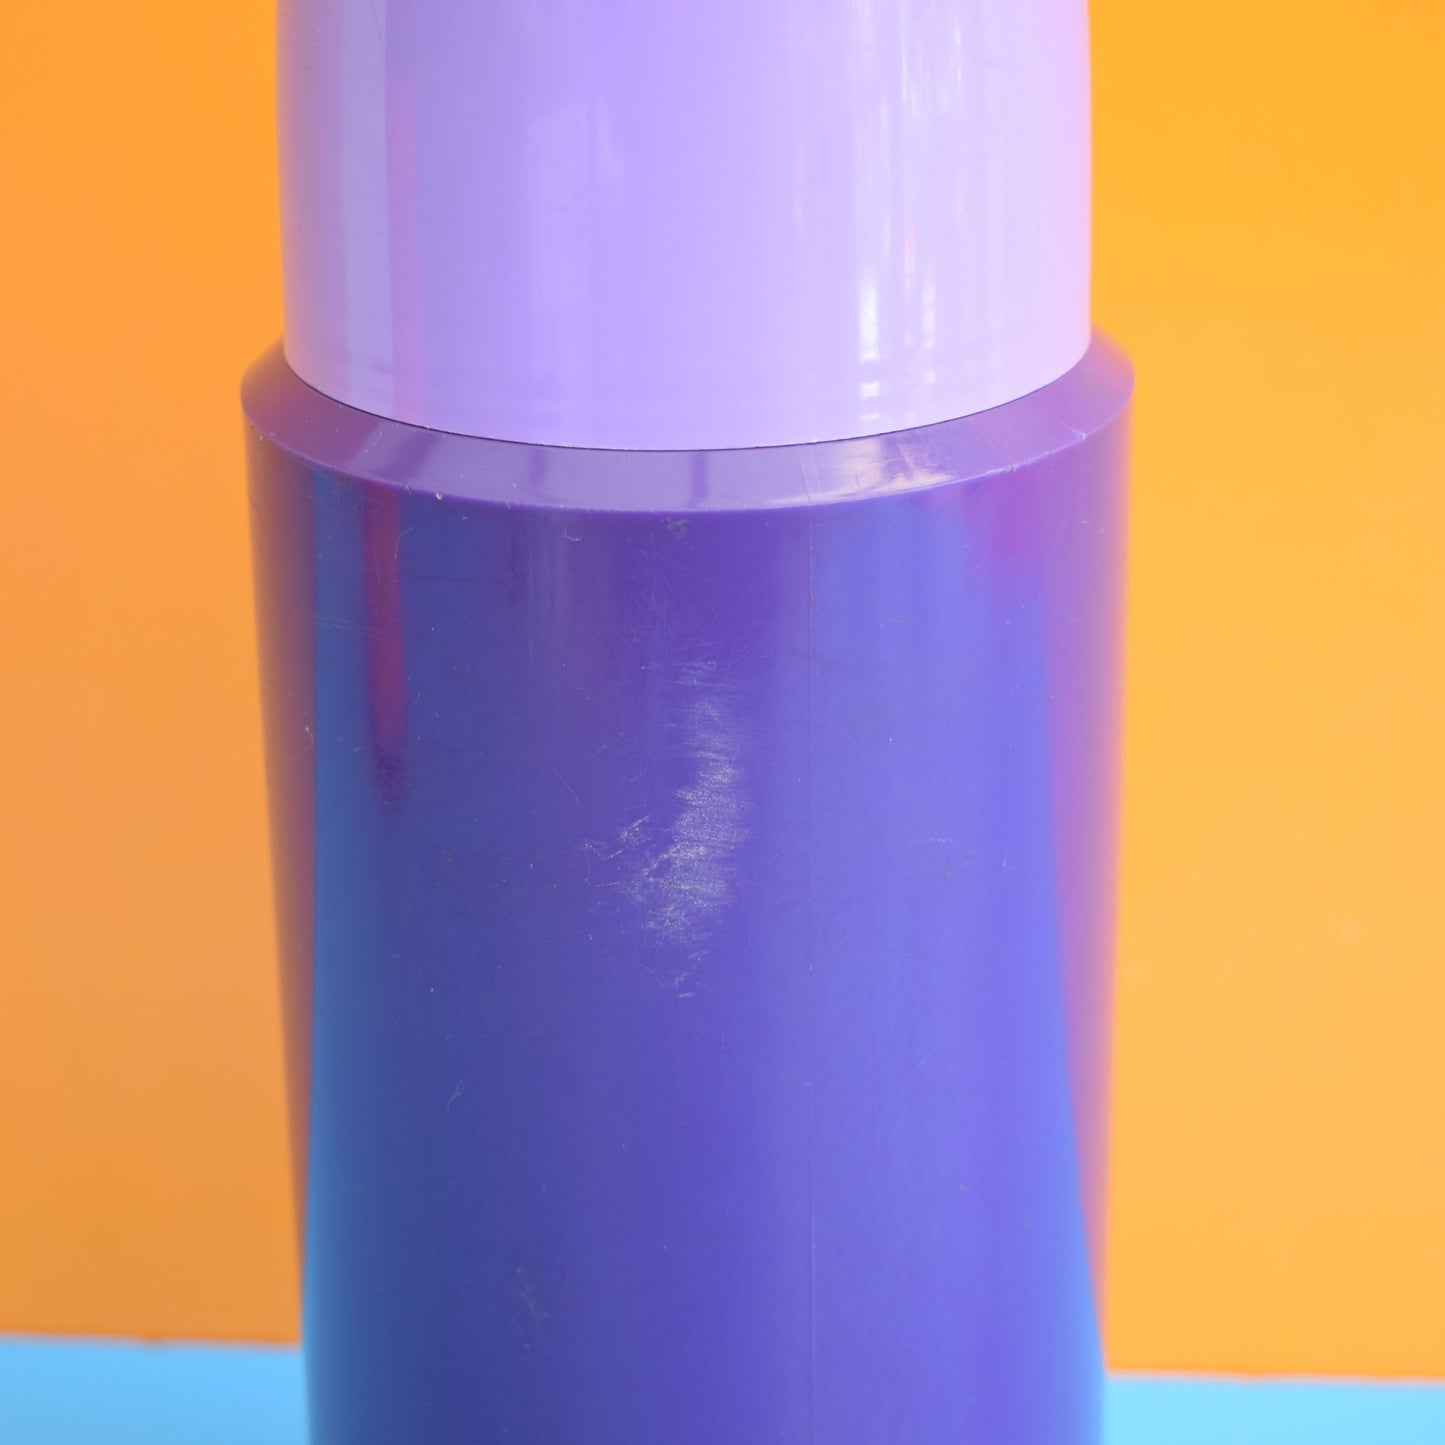 Vintage 1980s Large Plastic Thermos Flask - Purple